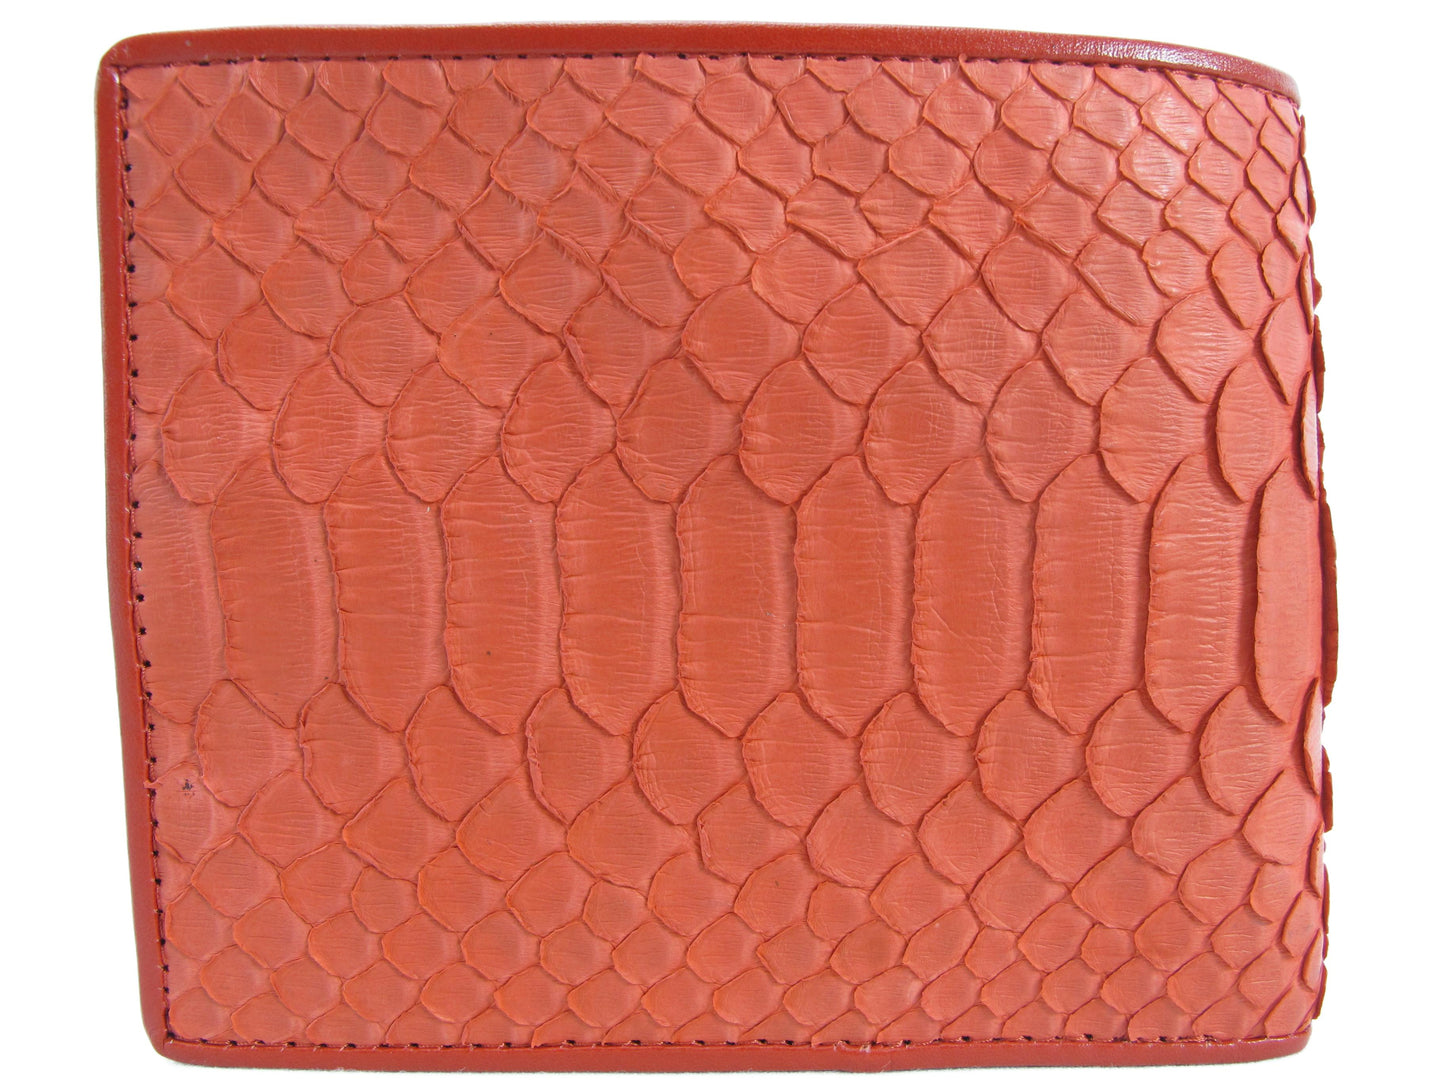 Genuine Python Belly Snake Skin Leather Soft Bifold Wallet